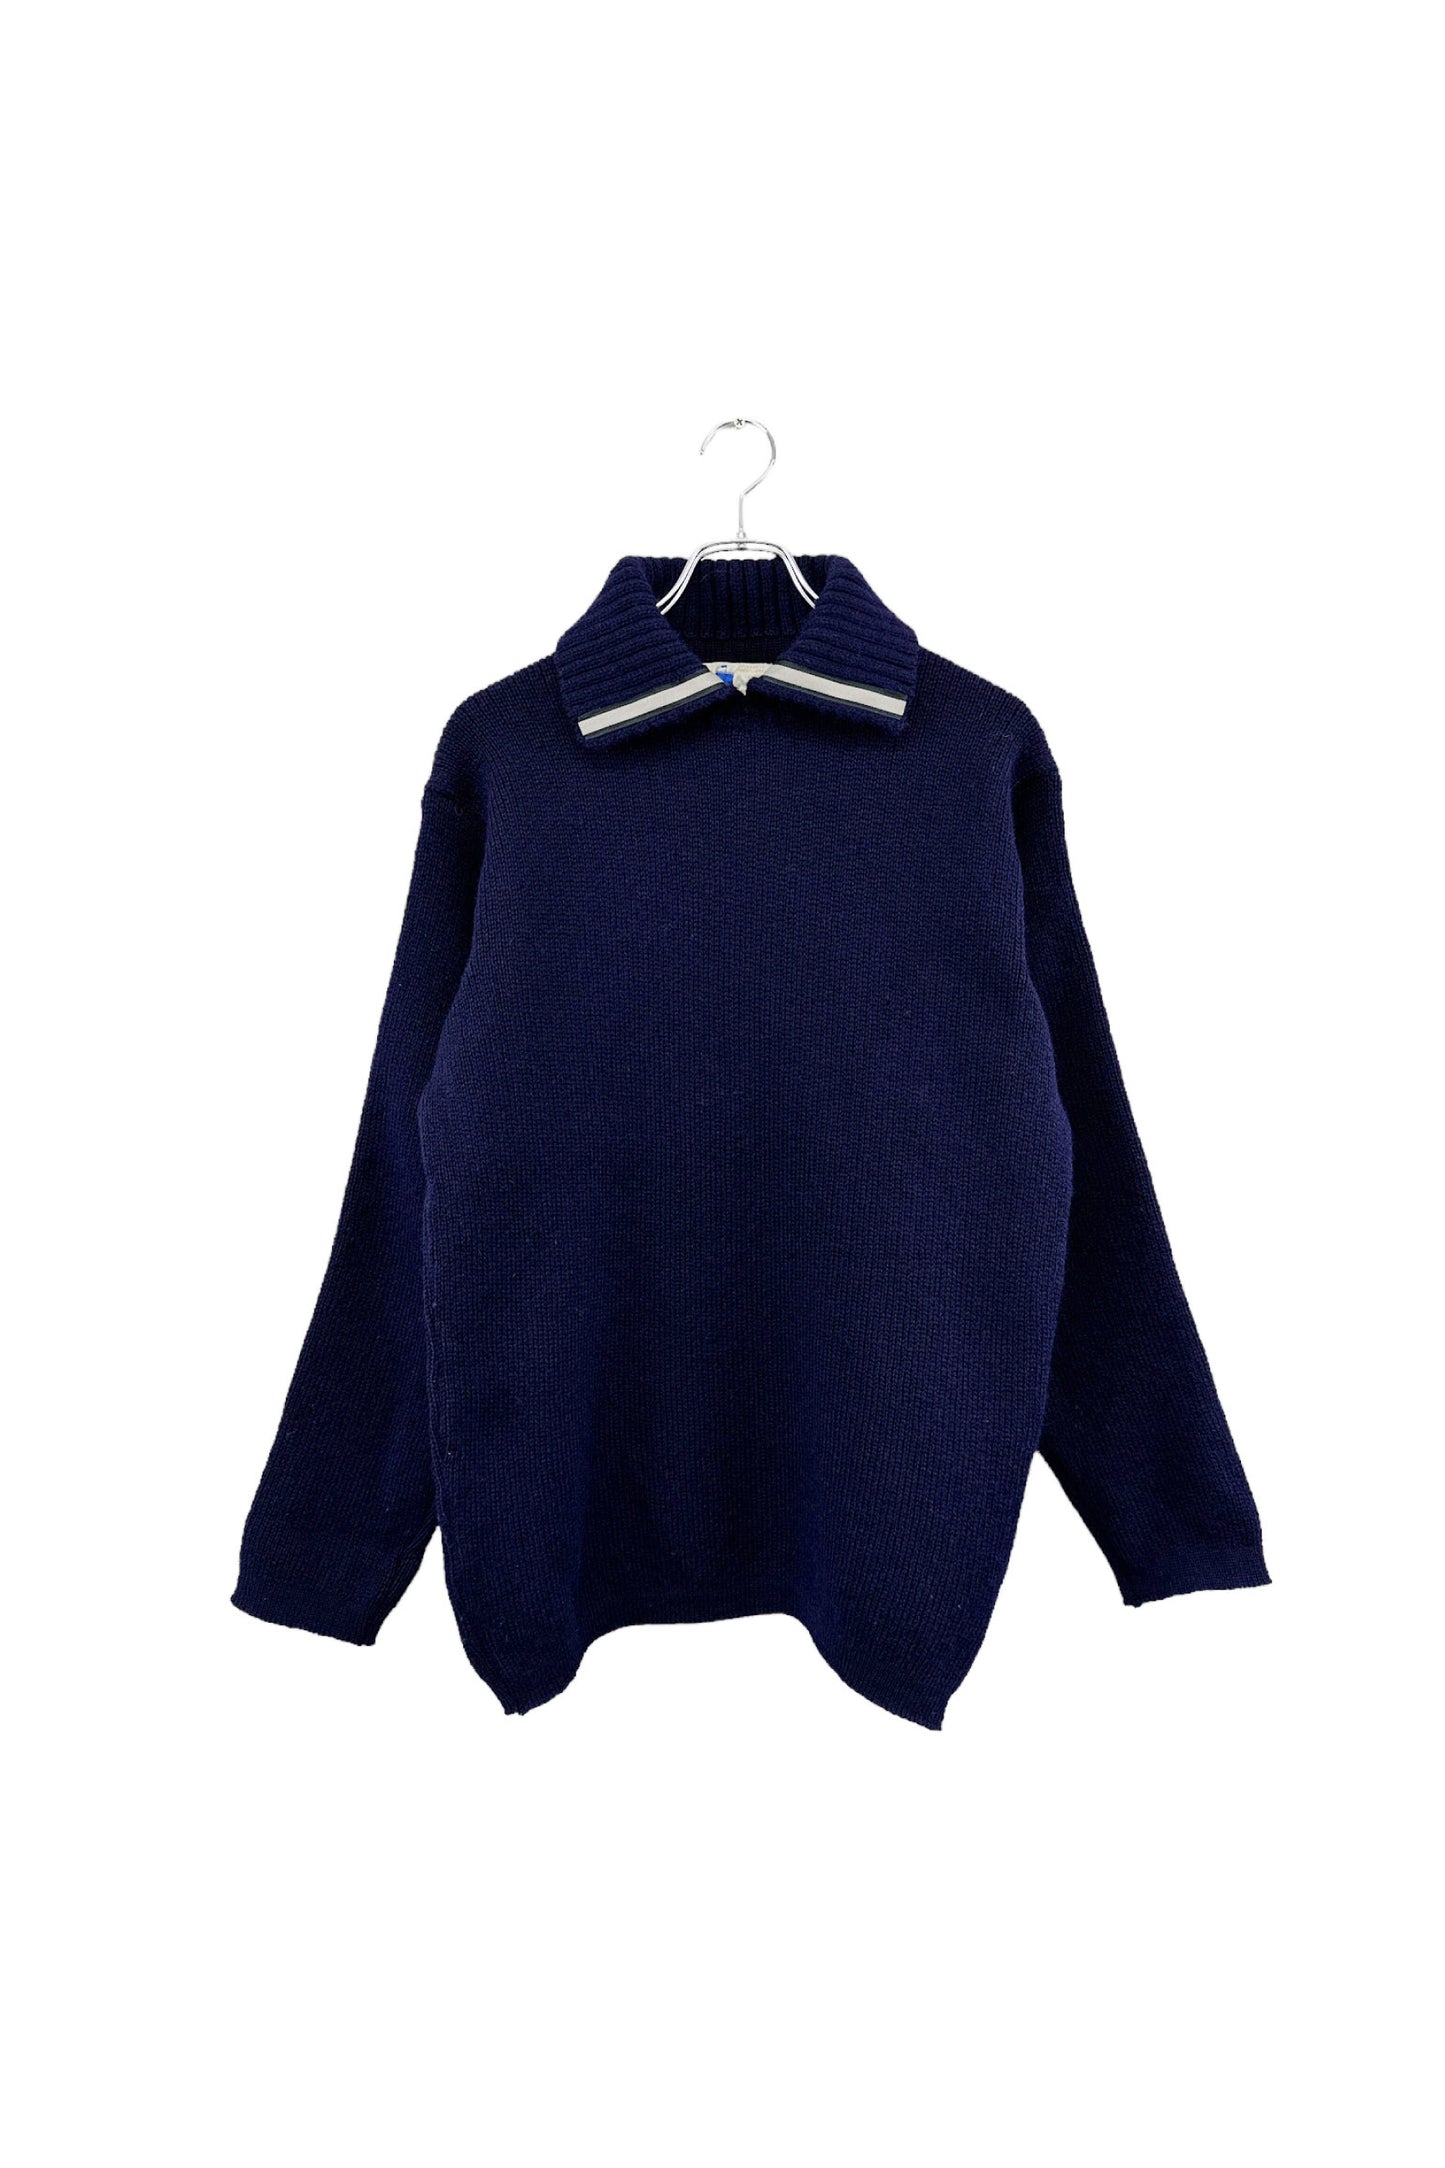 90's Judam Shetland Ltd sweater